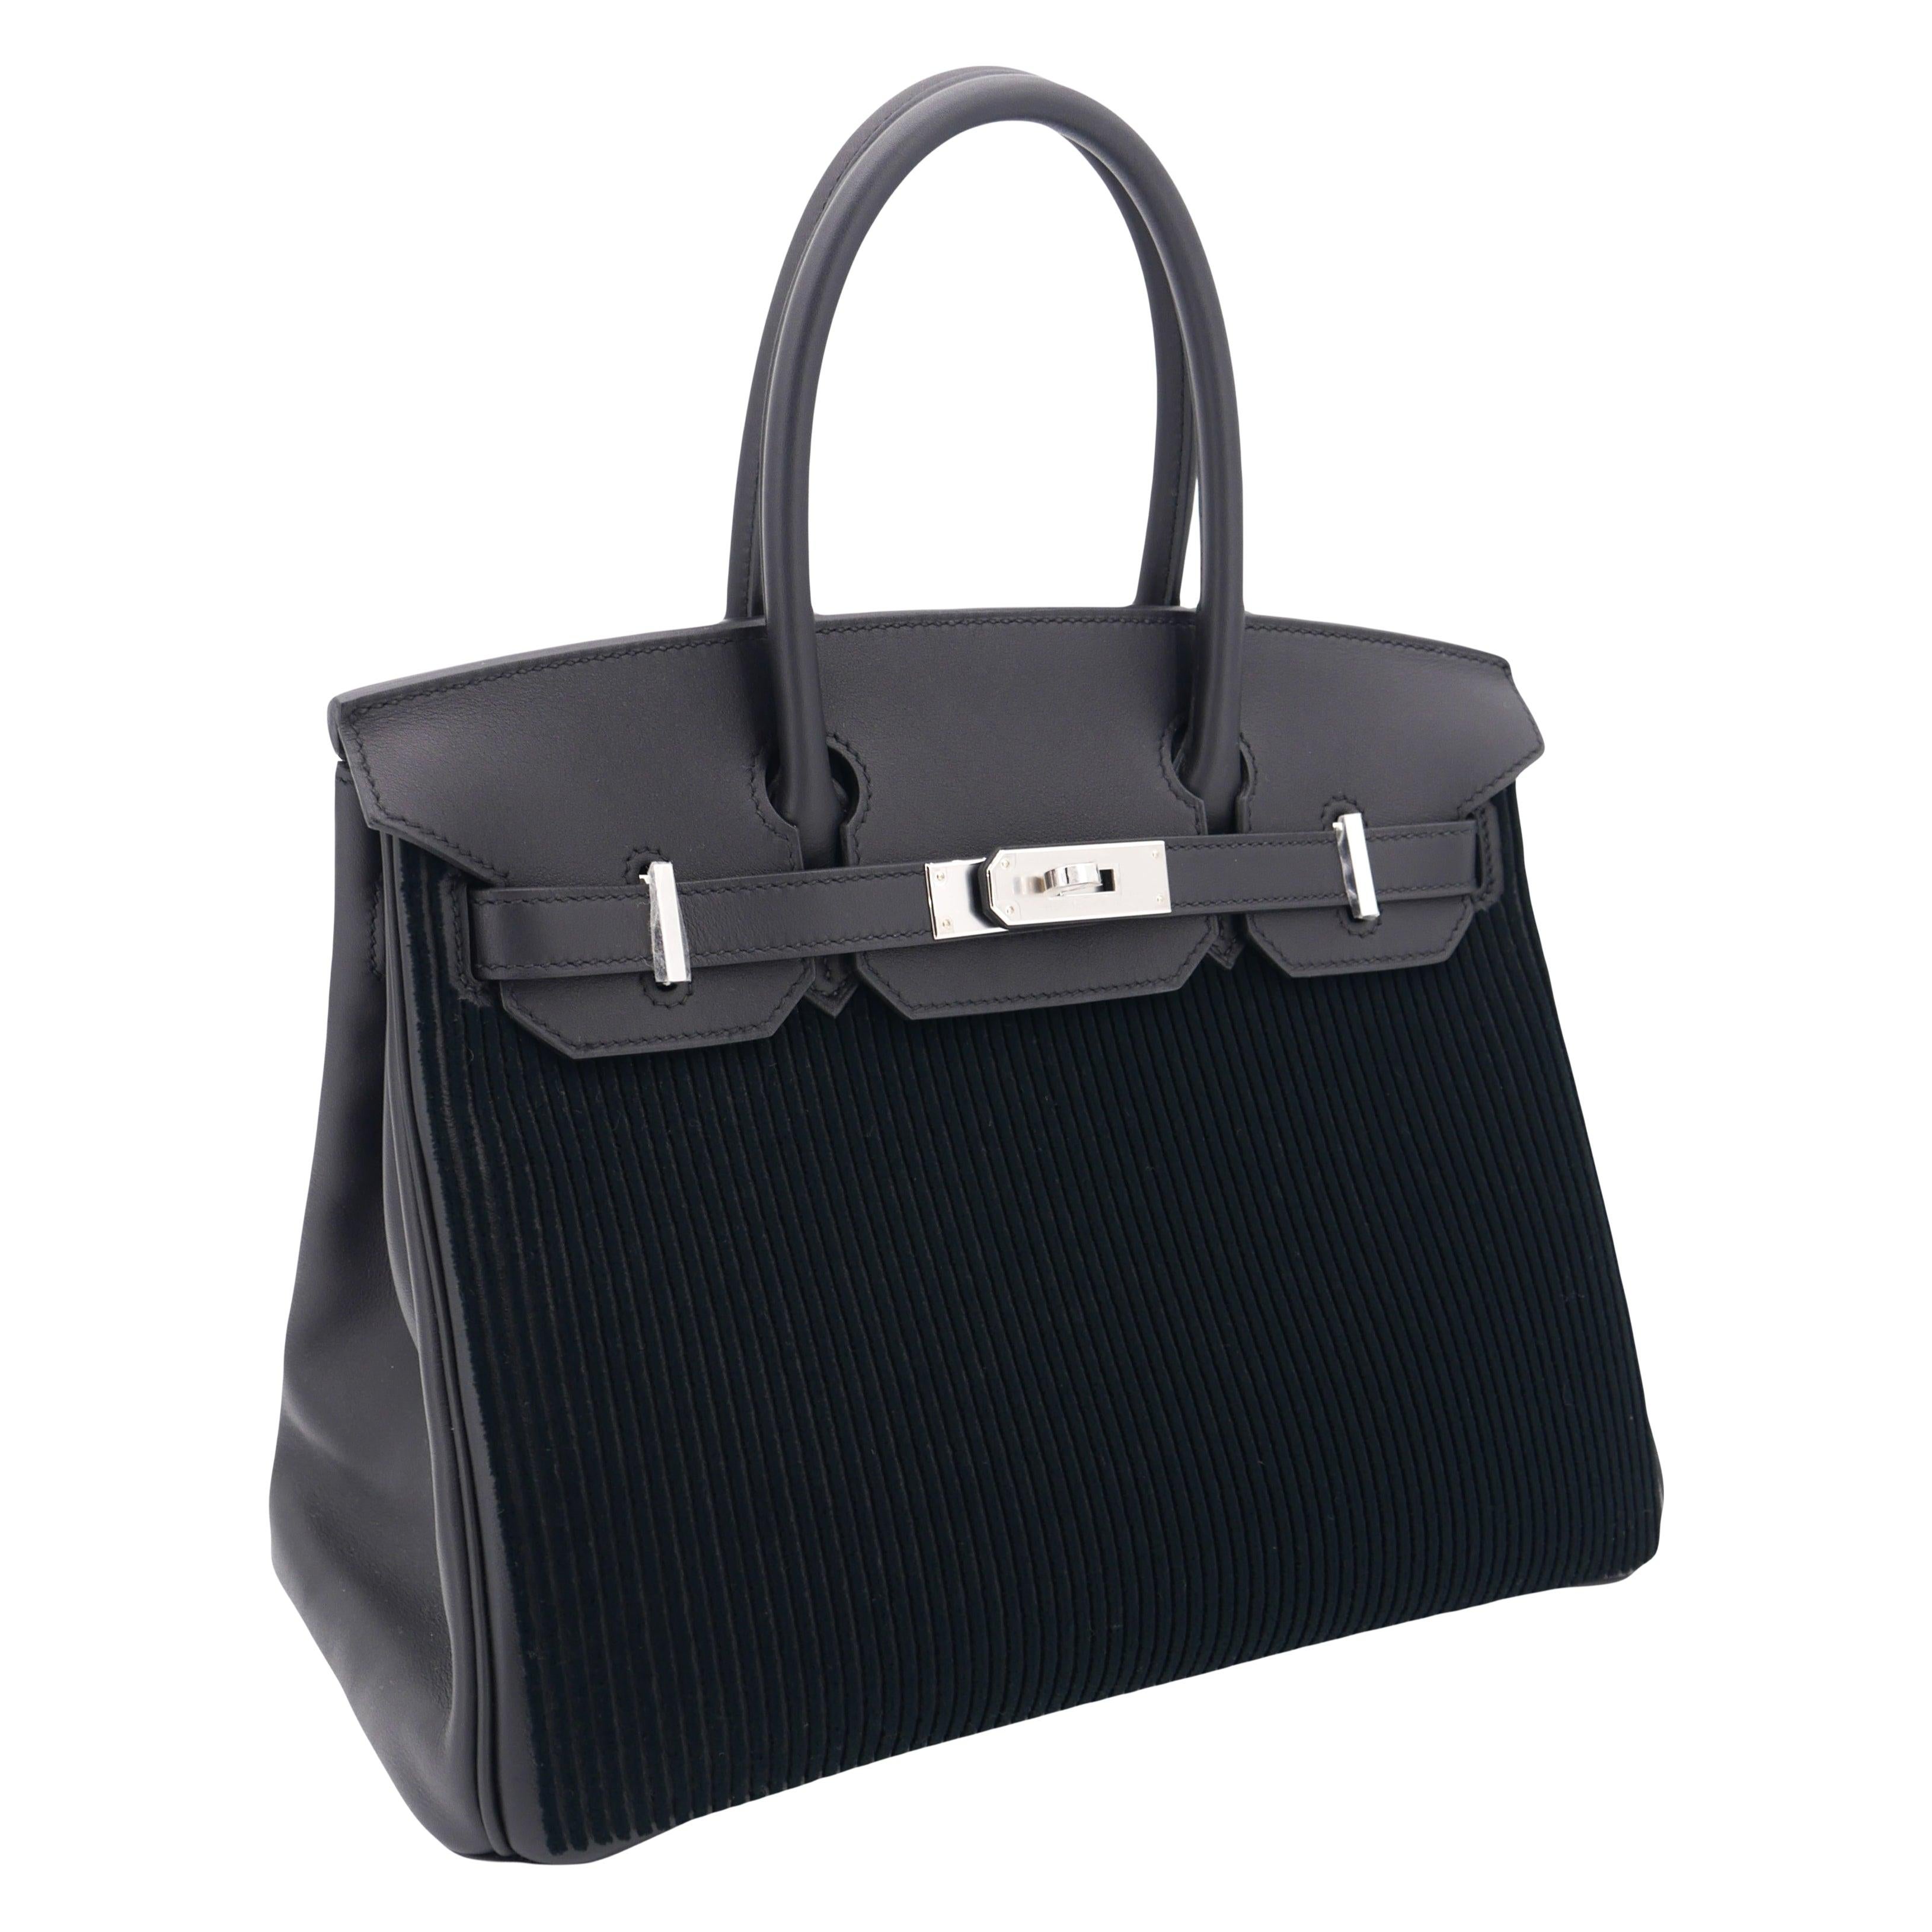 Brand: Hermès
Style: Birkin
Size: 30cm
Color: Caban/Black
Material: Tufting/Swift Leather
Hardware: Palladium (PHW)
Dimensions: 11.75